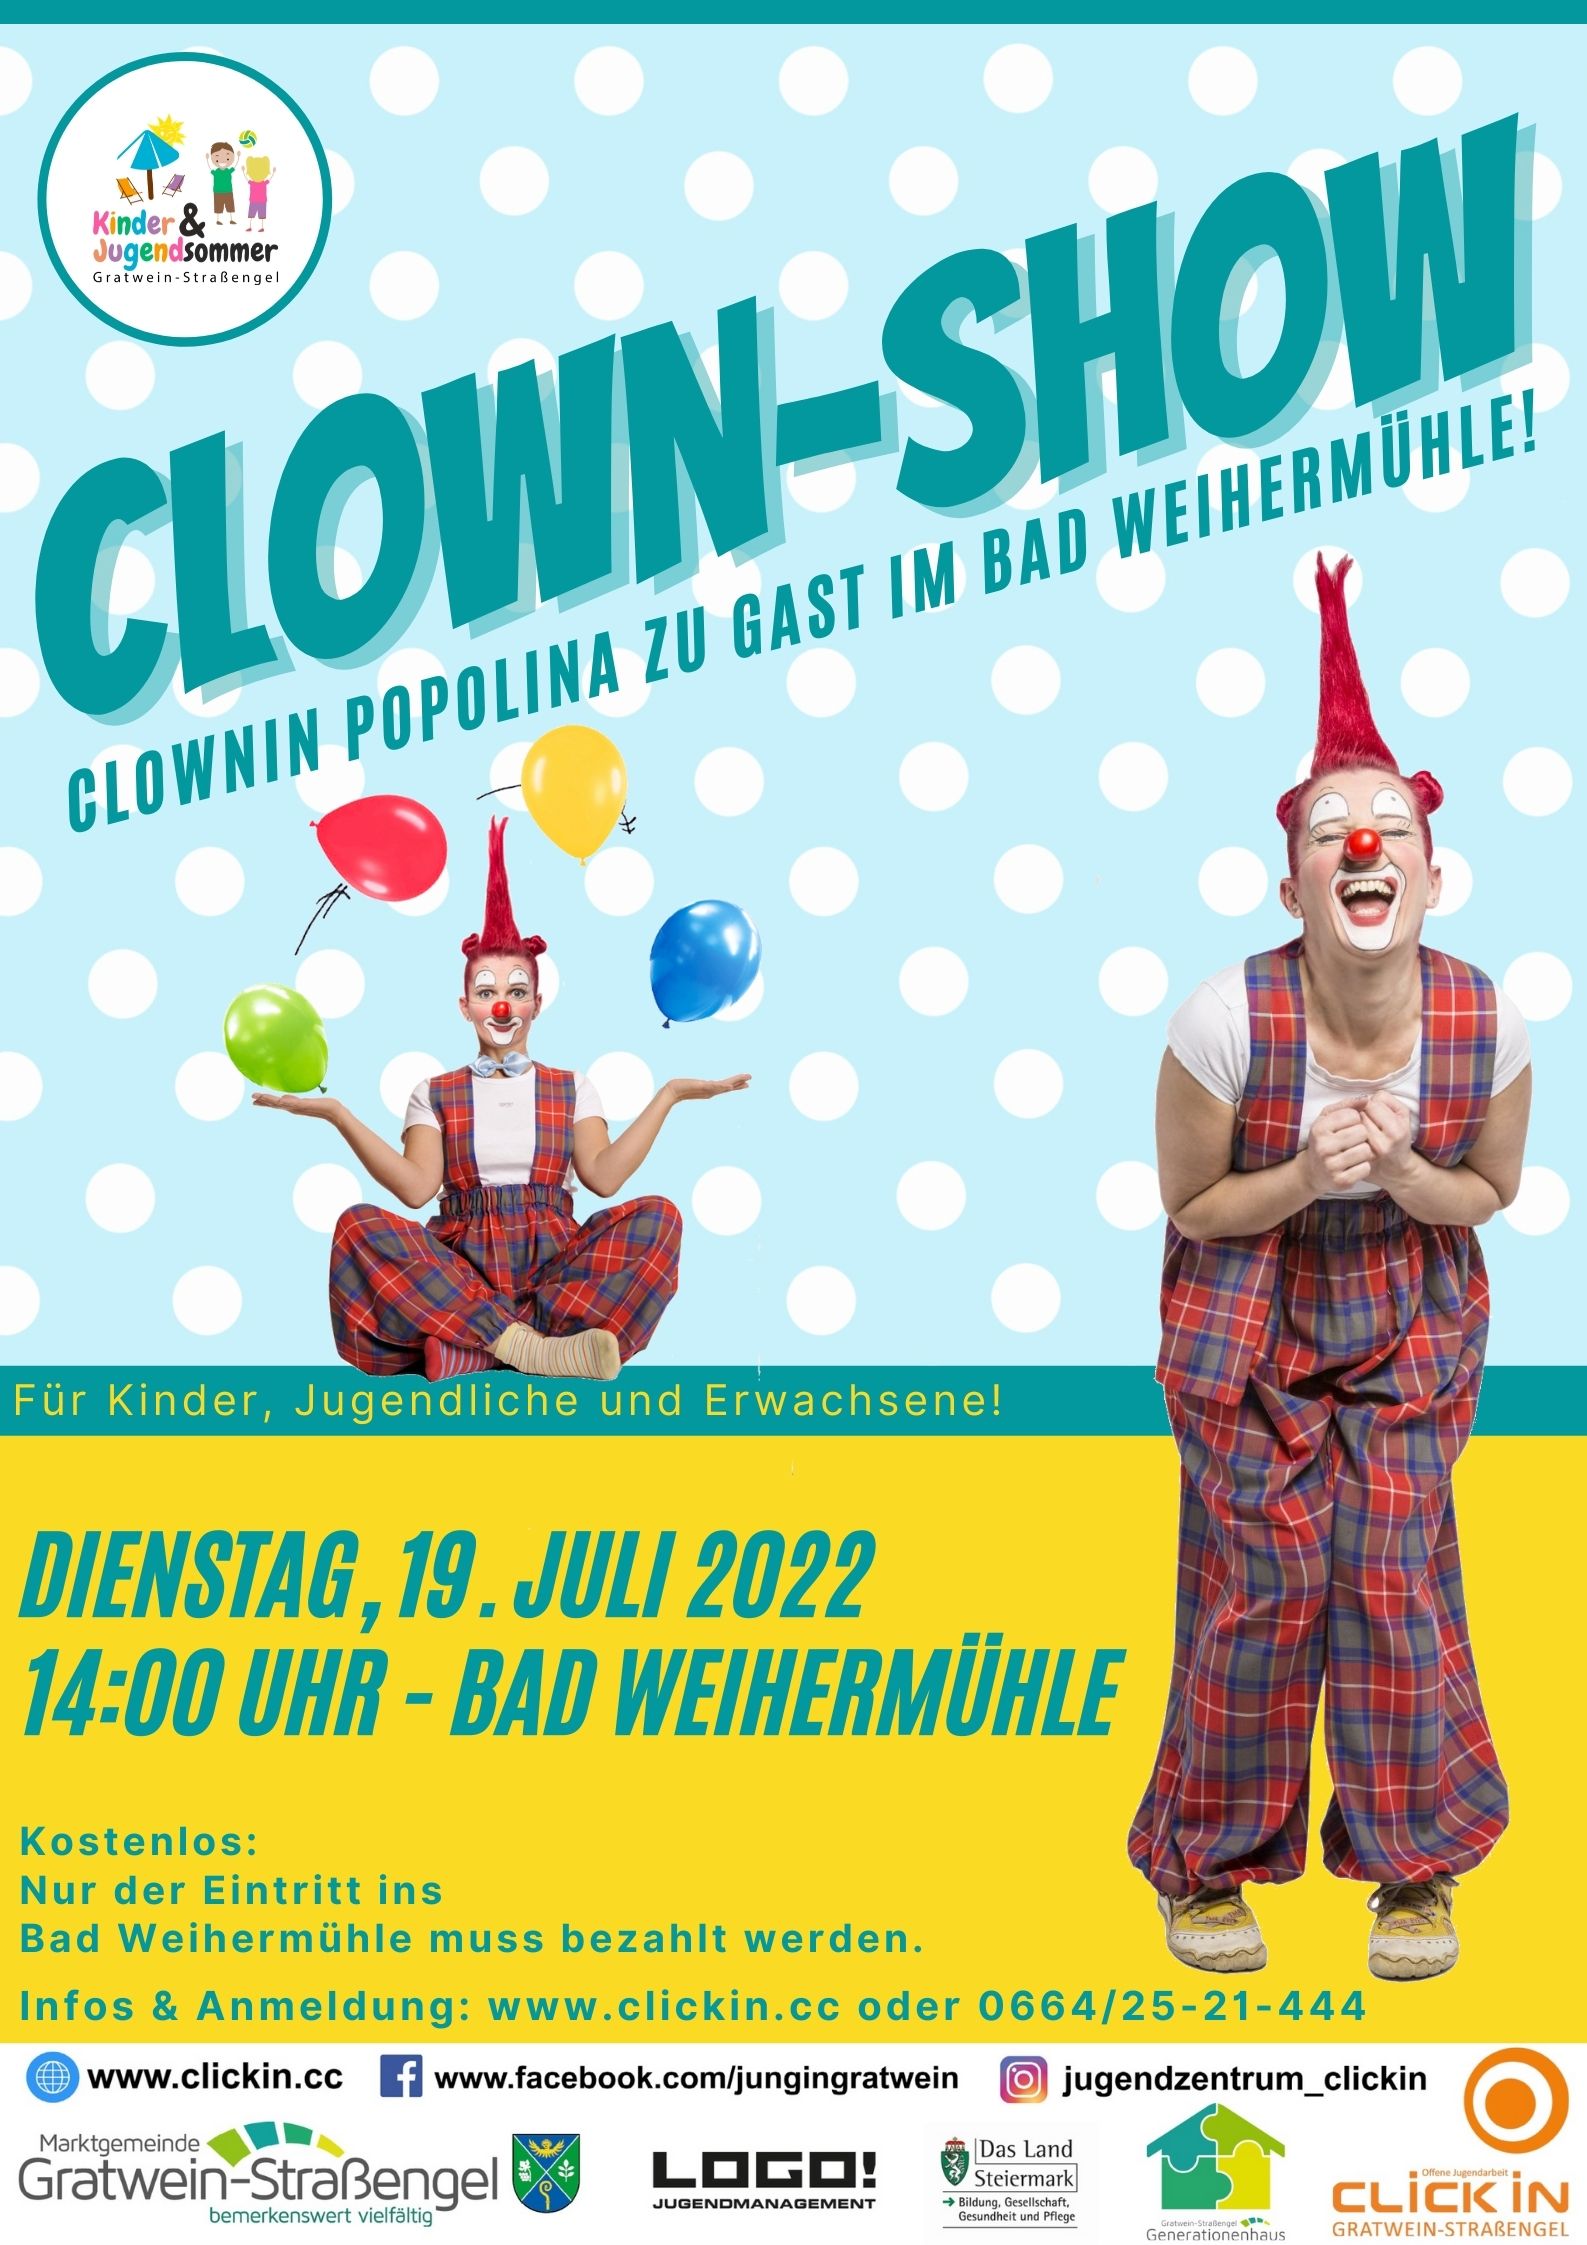 KIJUSO 22 - ClownShow